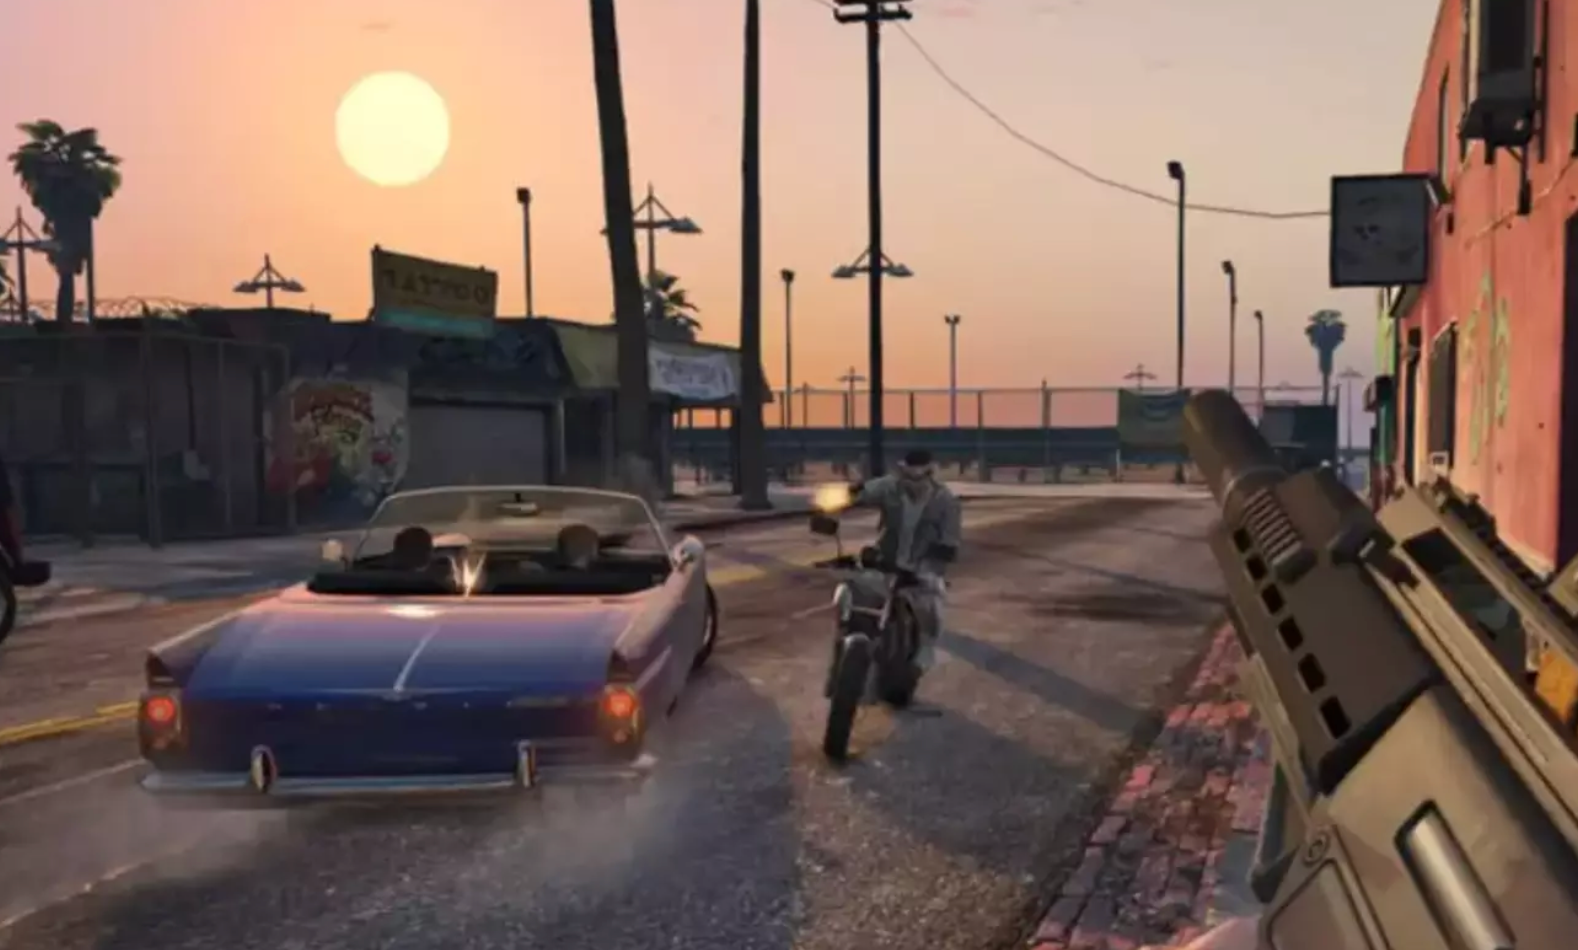 GTA 6 release news: Grand Theft Auto tease as Rockstar Games drop